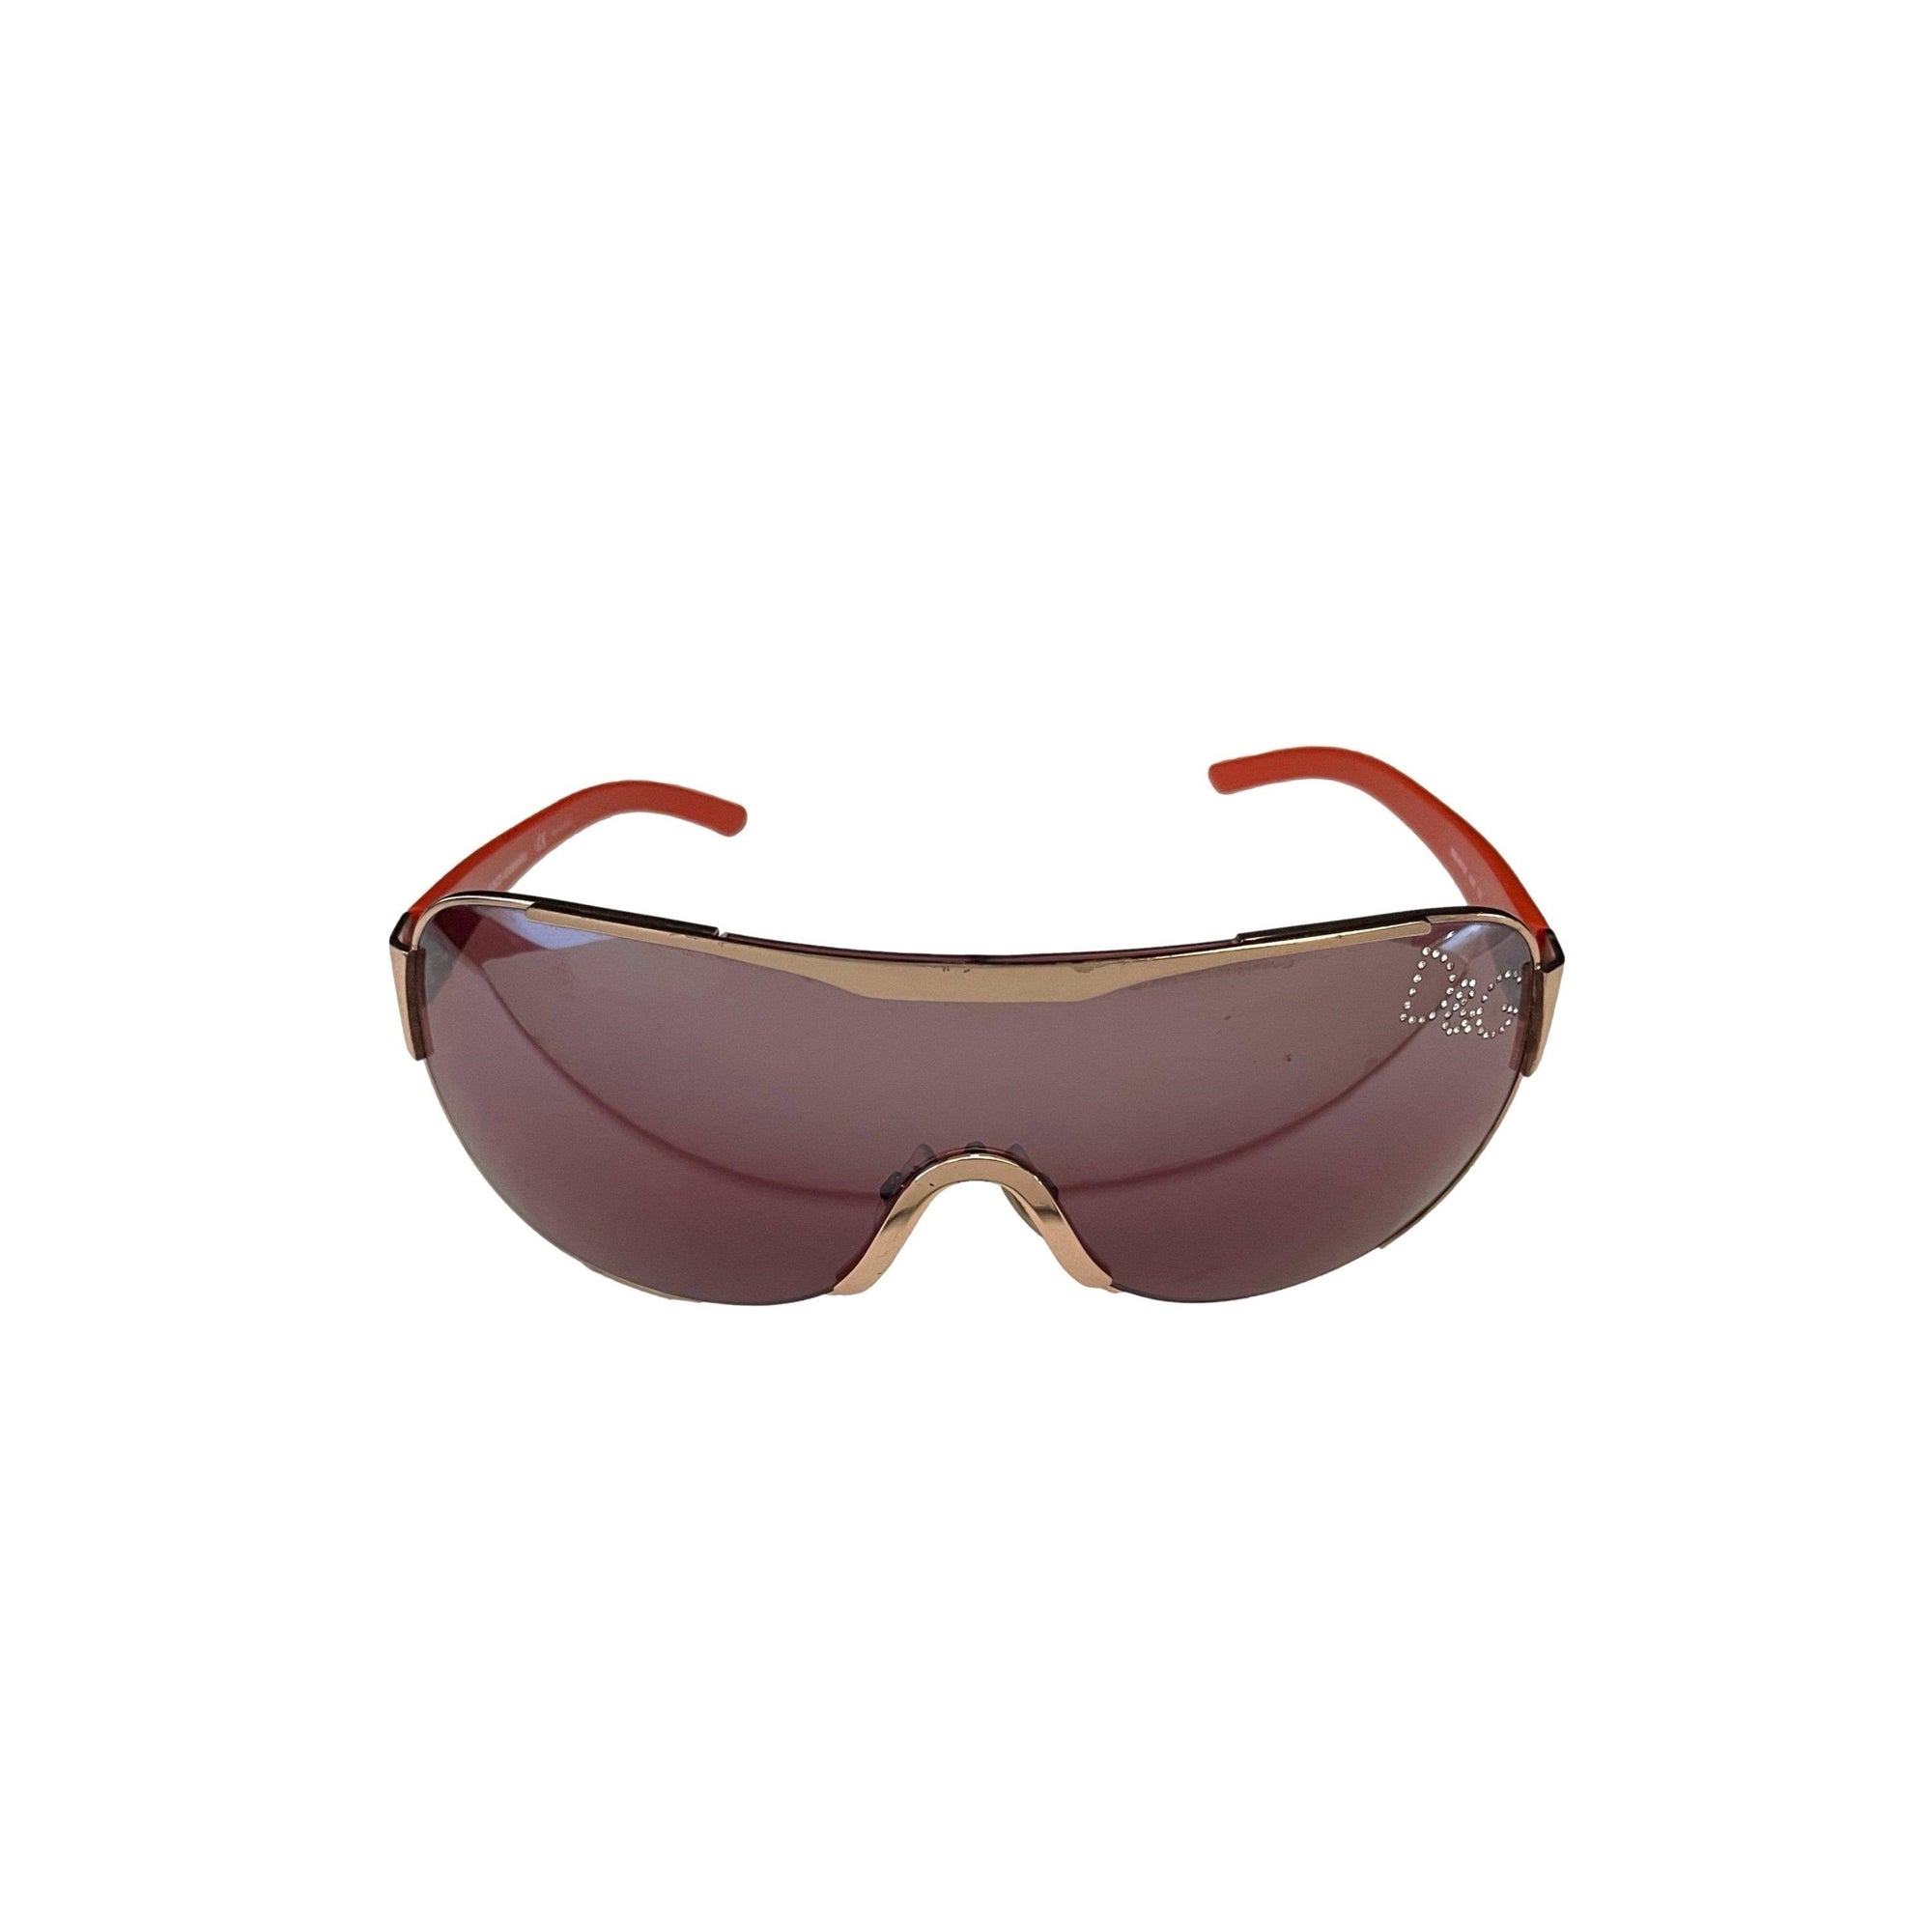 Dolce & Gabbana Purple Jumbo Sunglasses - Sunglasses